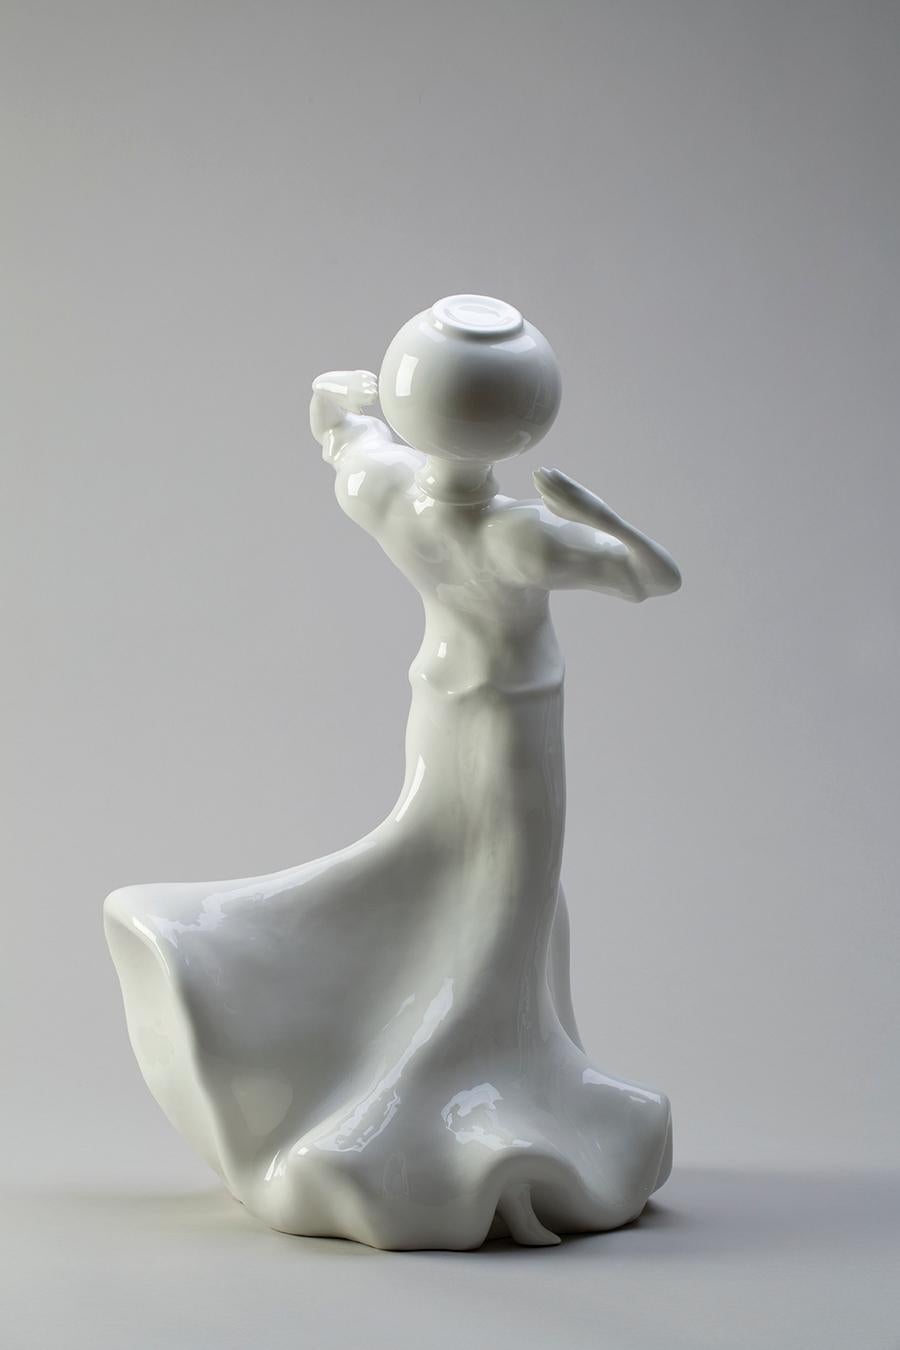 Art Deco White Ceramic Sculpture by Andrea Salvatori Italy Contemporary, 21st Century For Sale